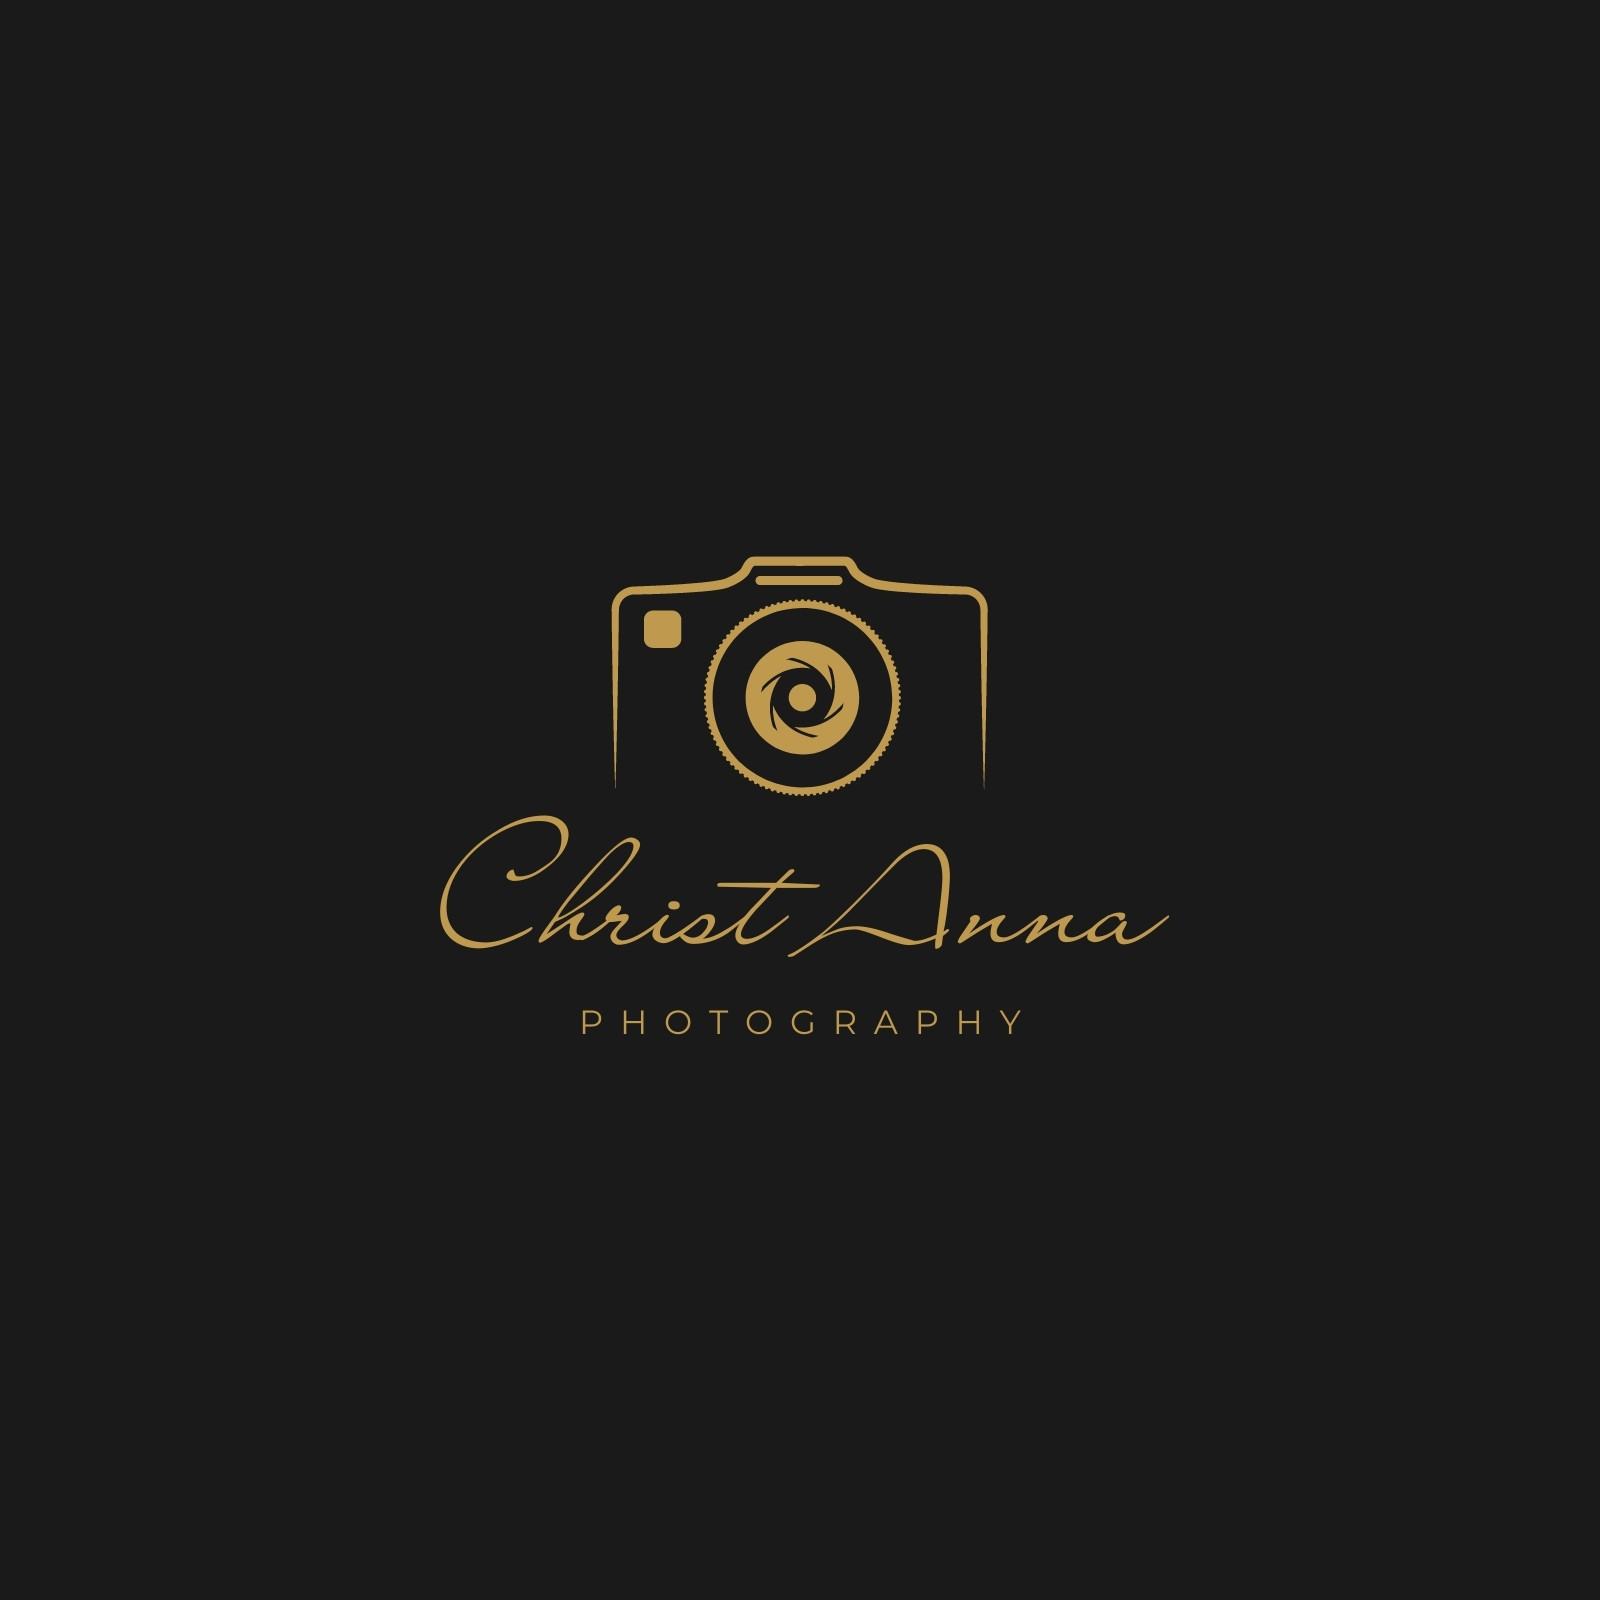 Customize 2,270+ Photography Logo Templates Online - Canva